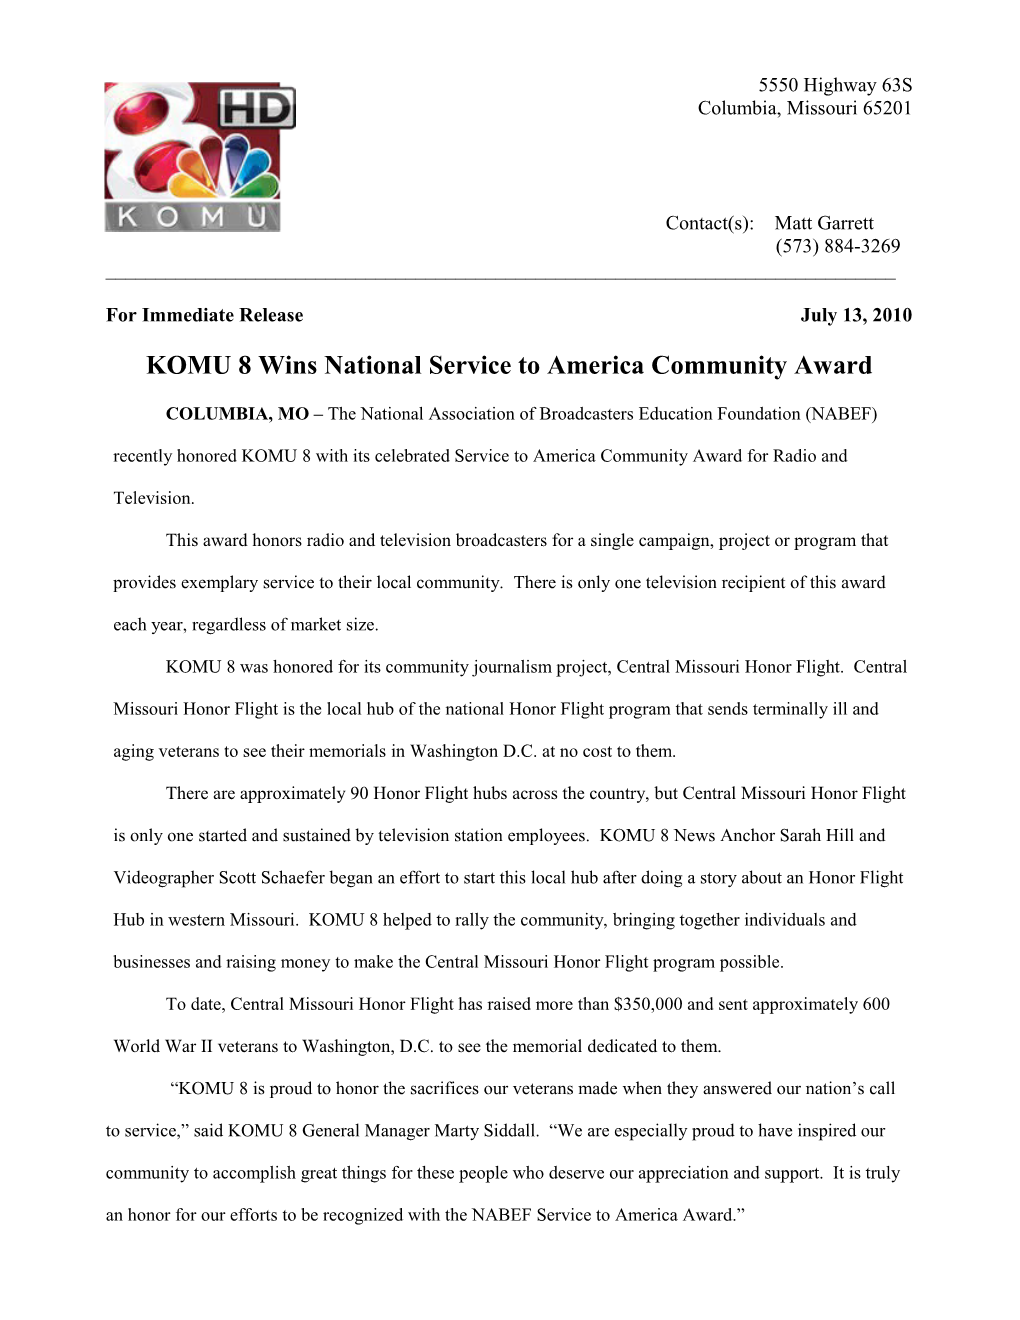 KOMU 8 Wins National Service to America Community Award